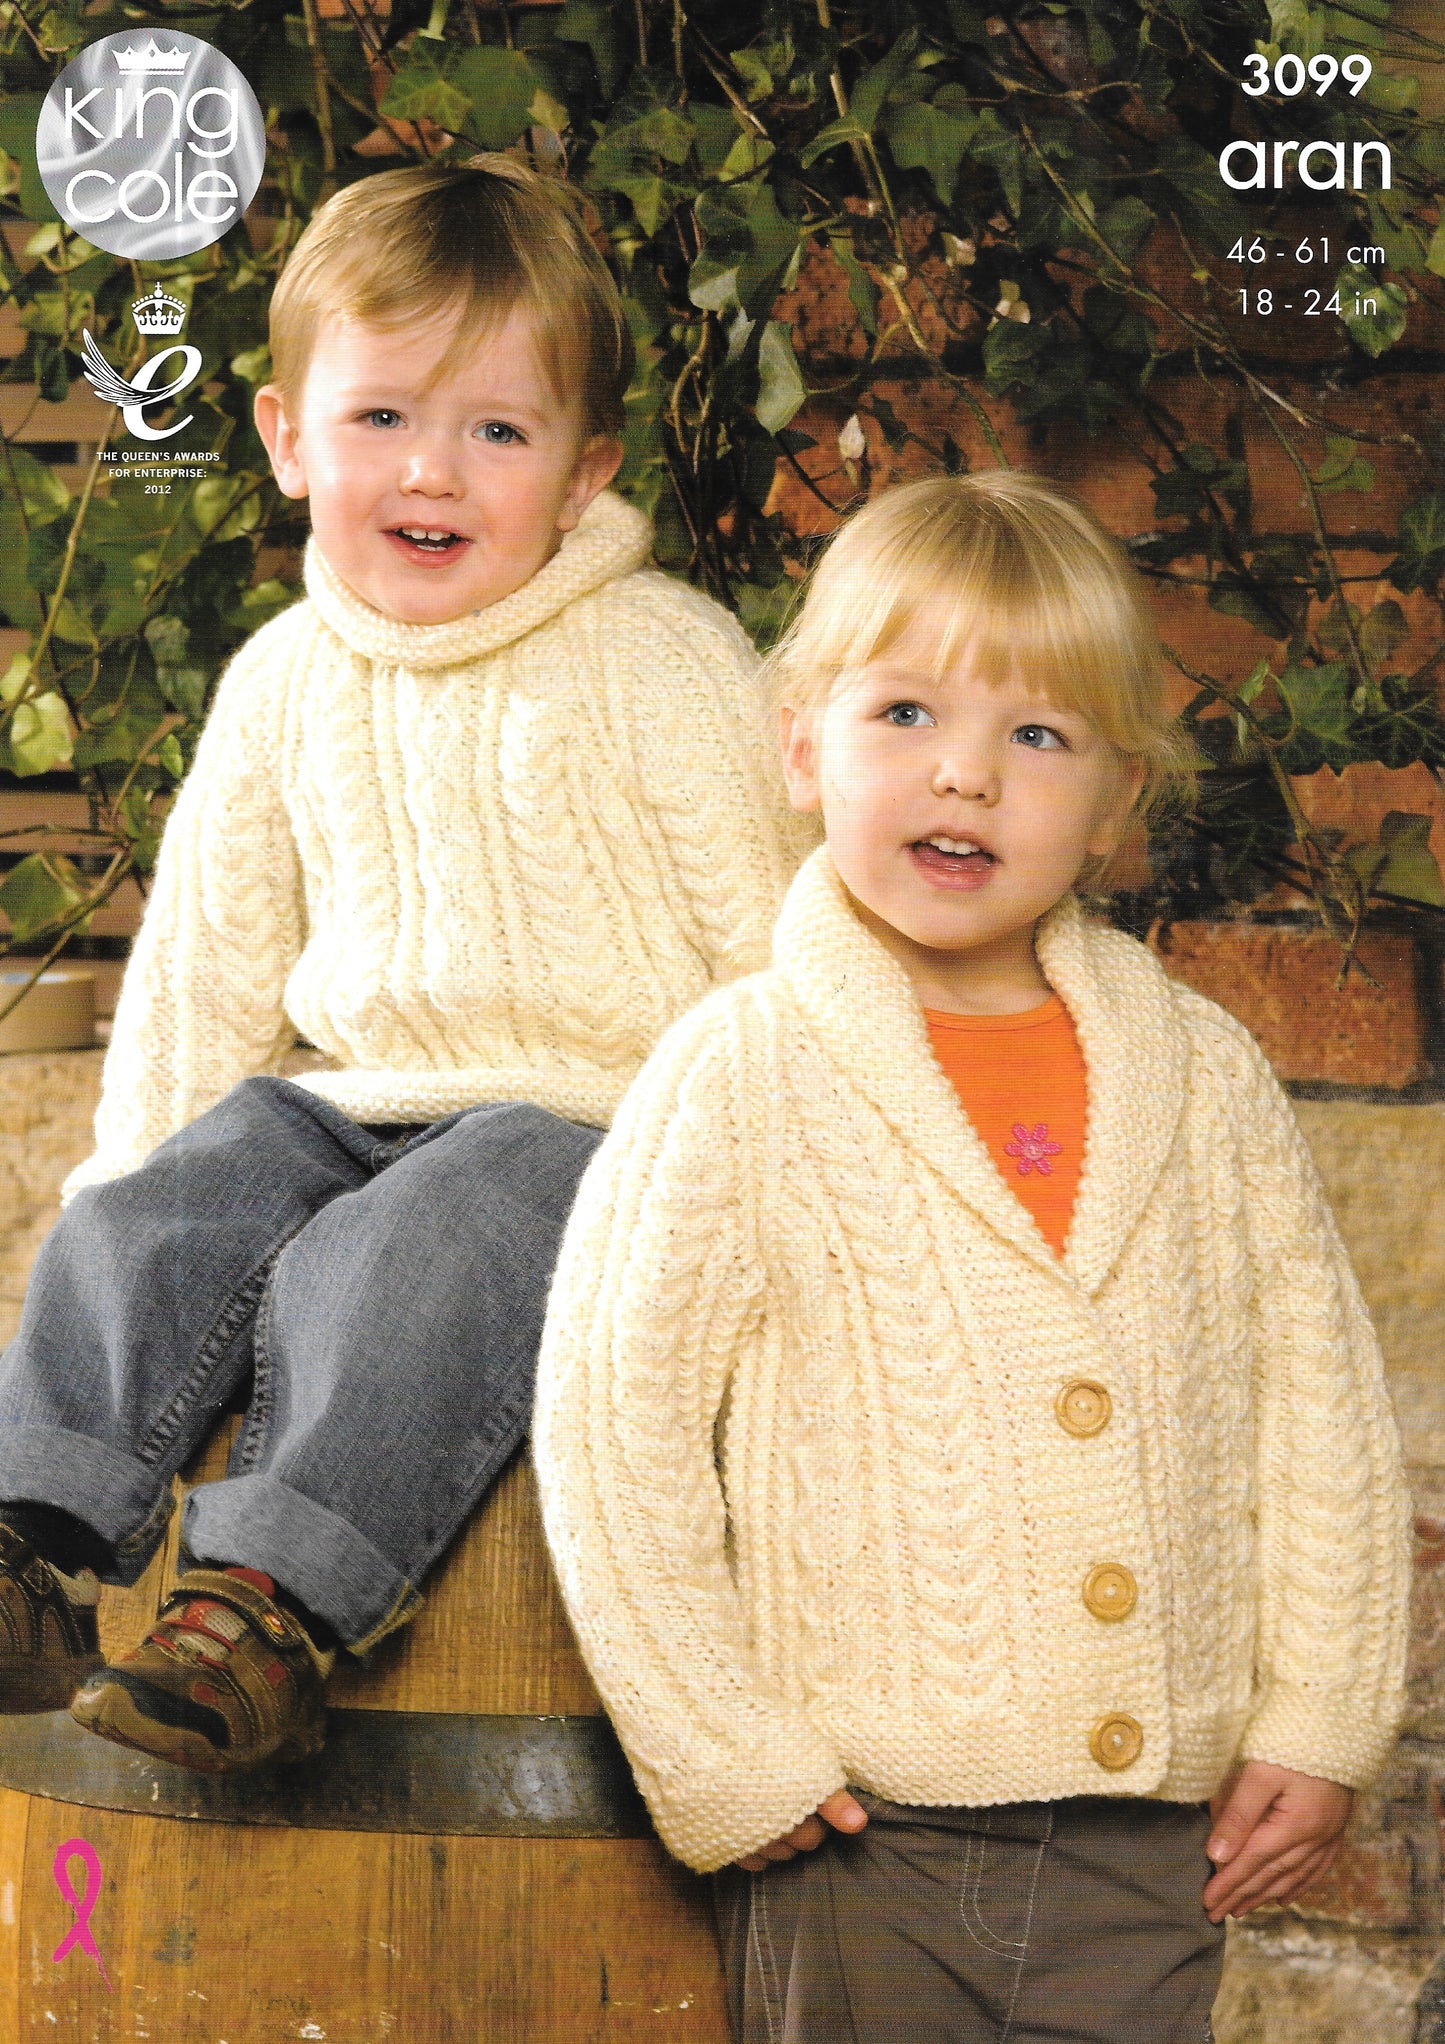 3099 King Cole knitting pattern. Child's cardigan/sweater. Aran